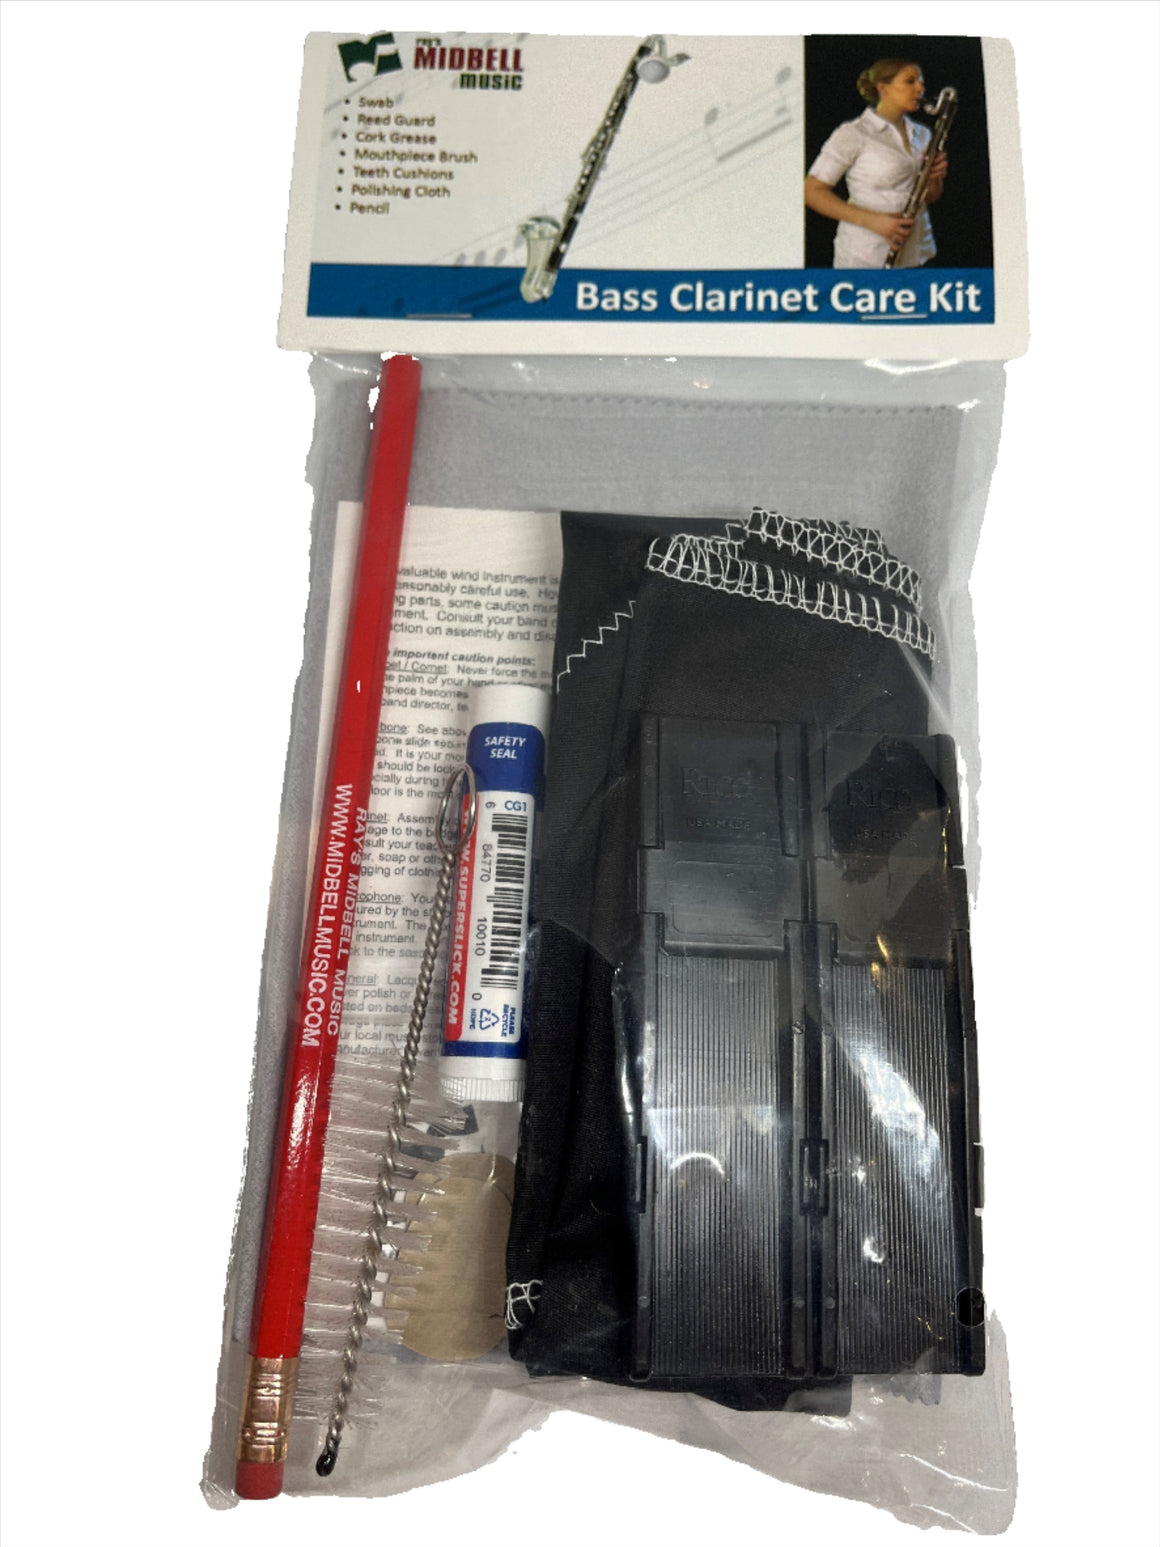 MIDBELL IBCCK Bass Clarinet Care Kit